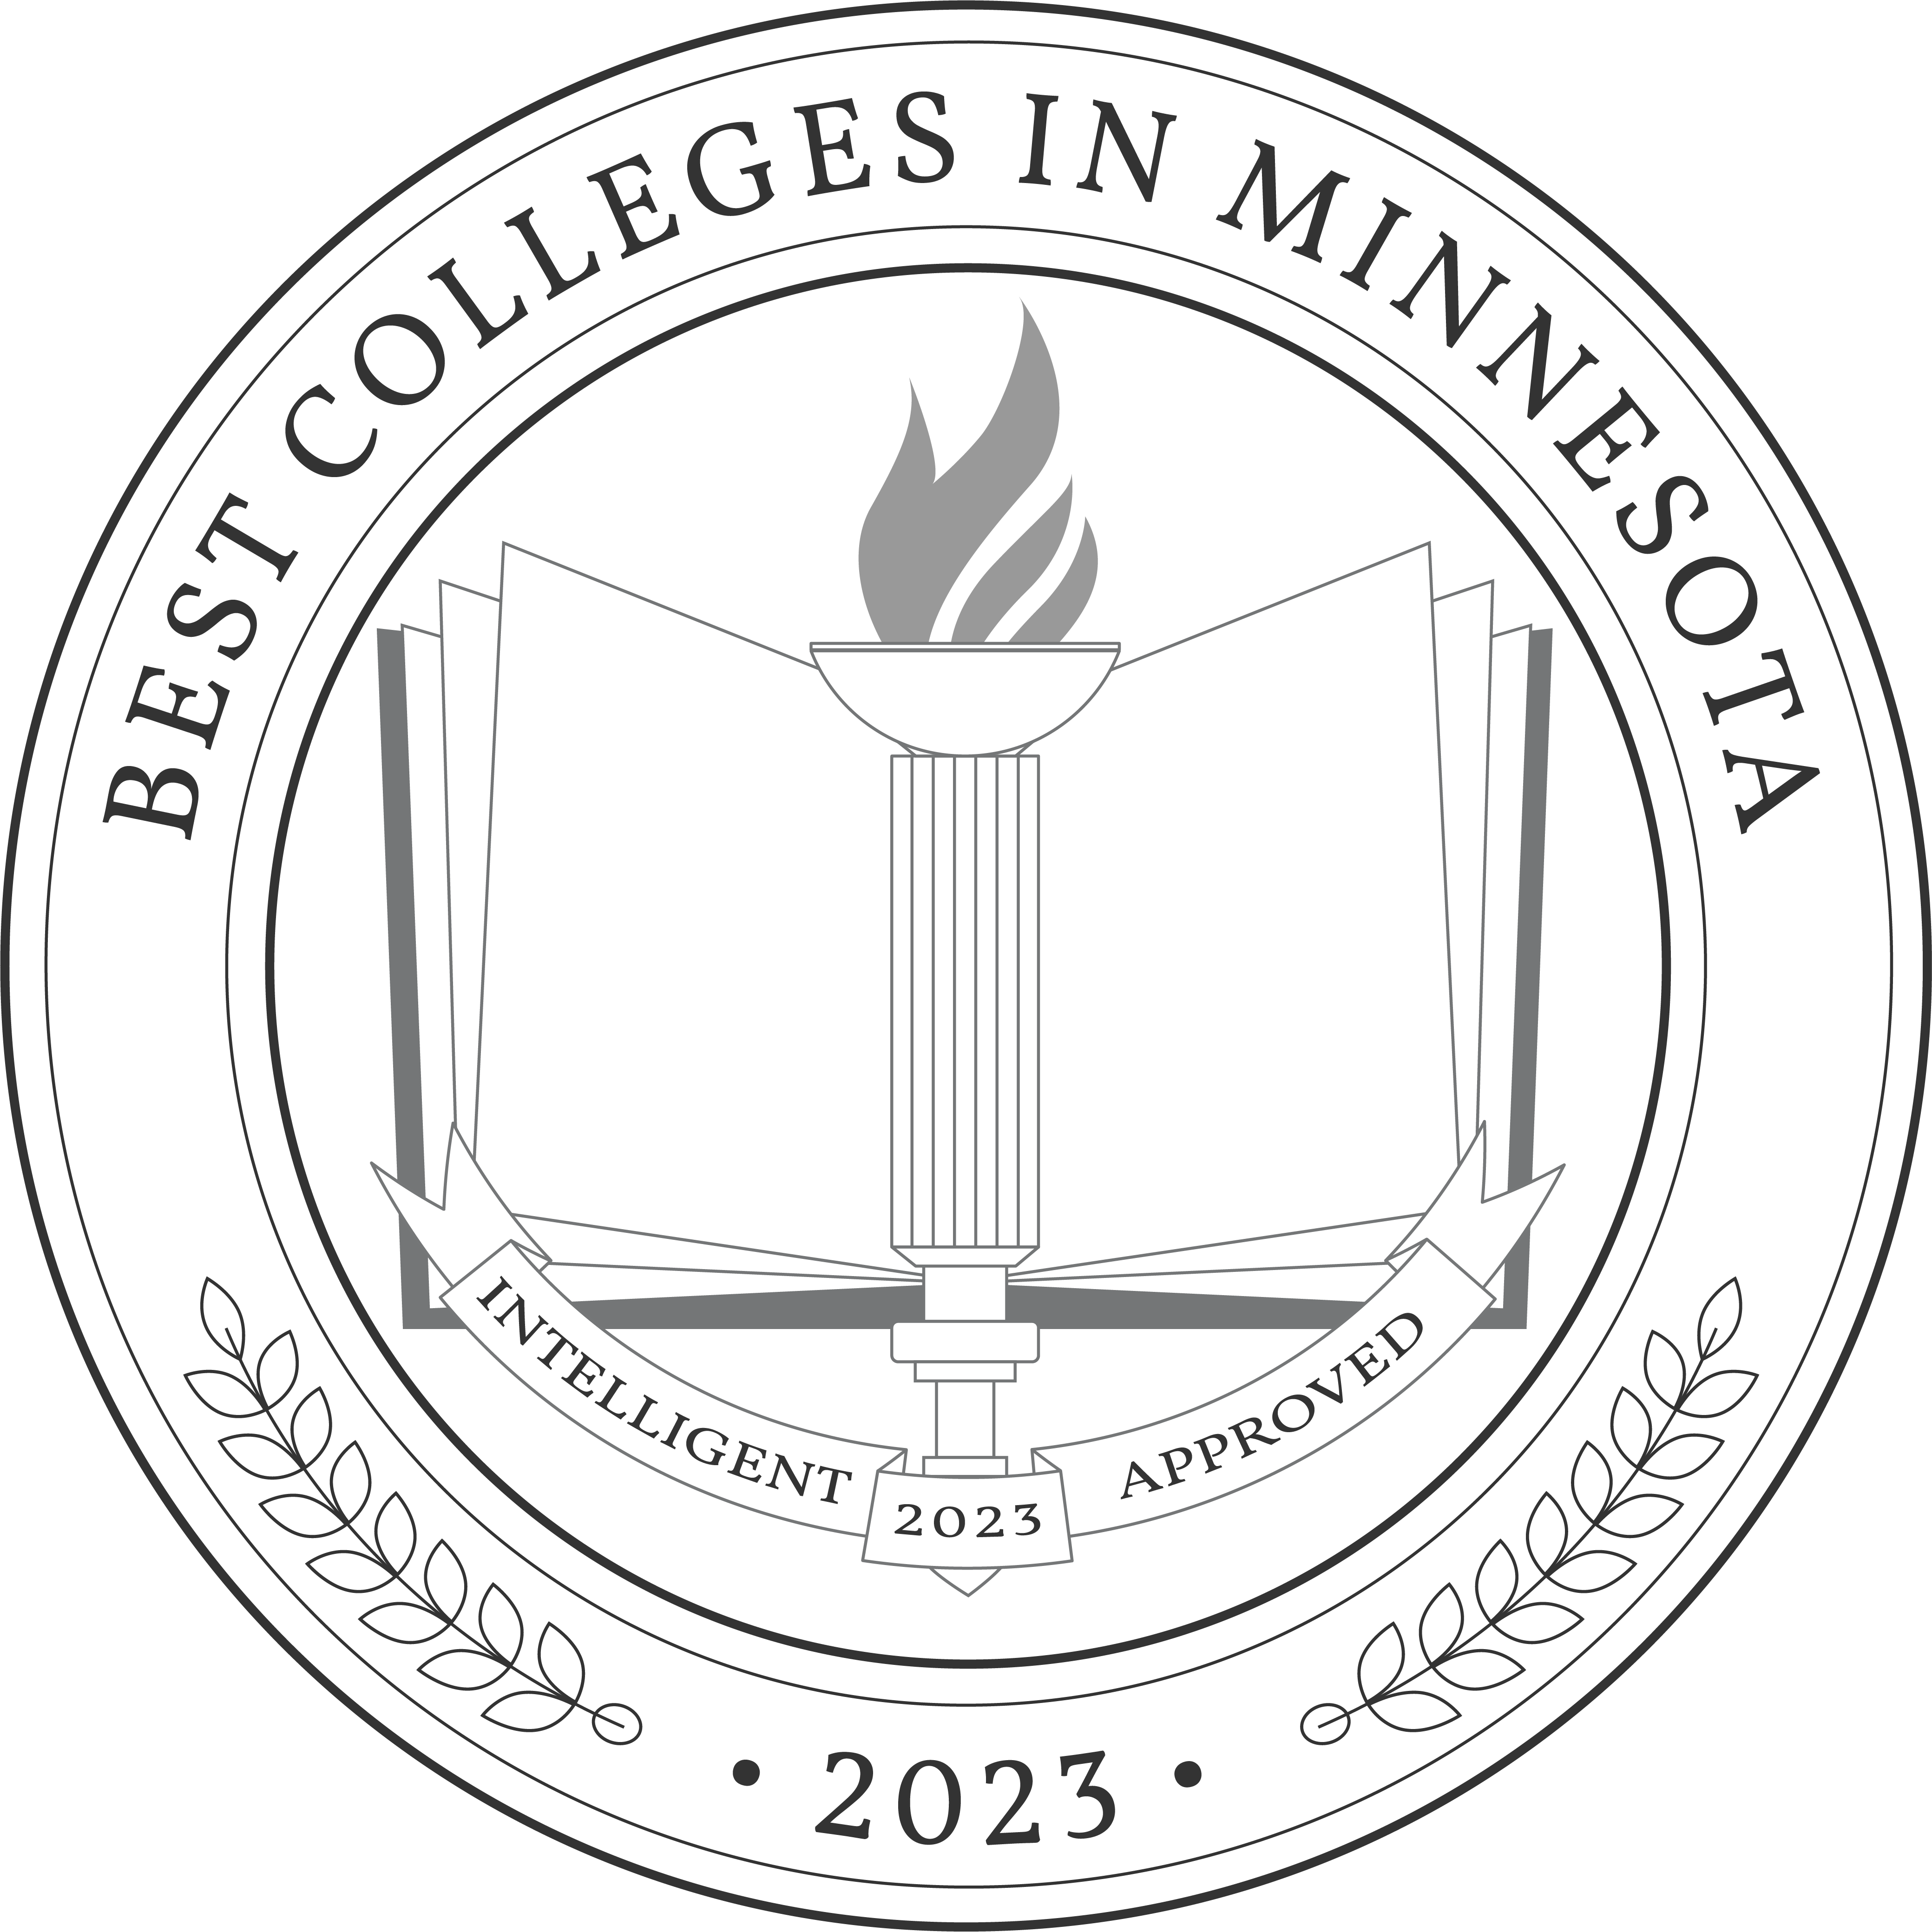 Best Colleges in Minnesota 2023 Badge